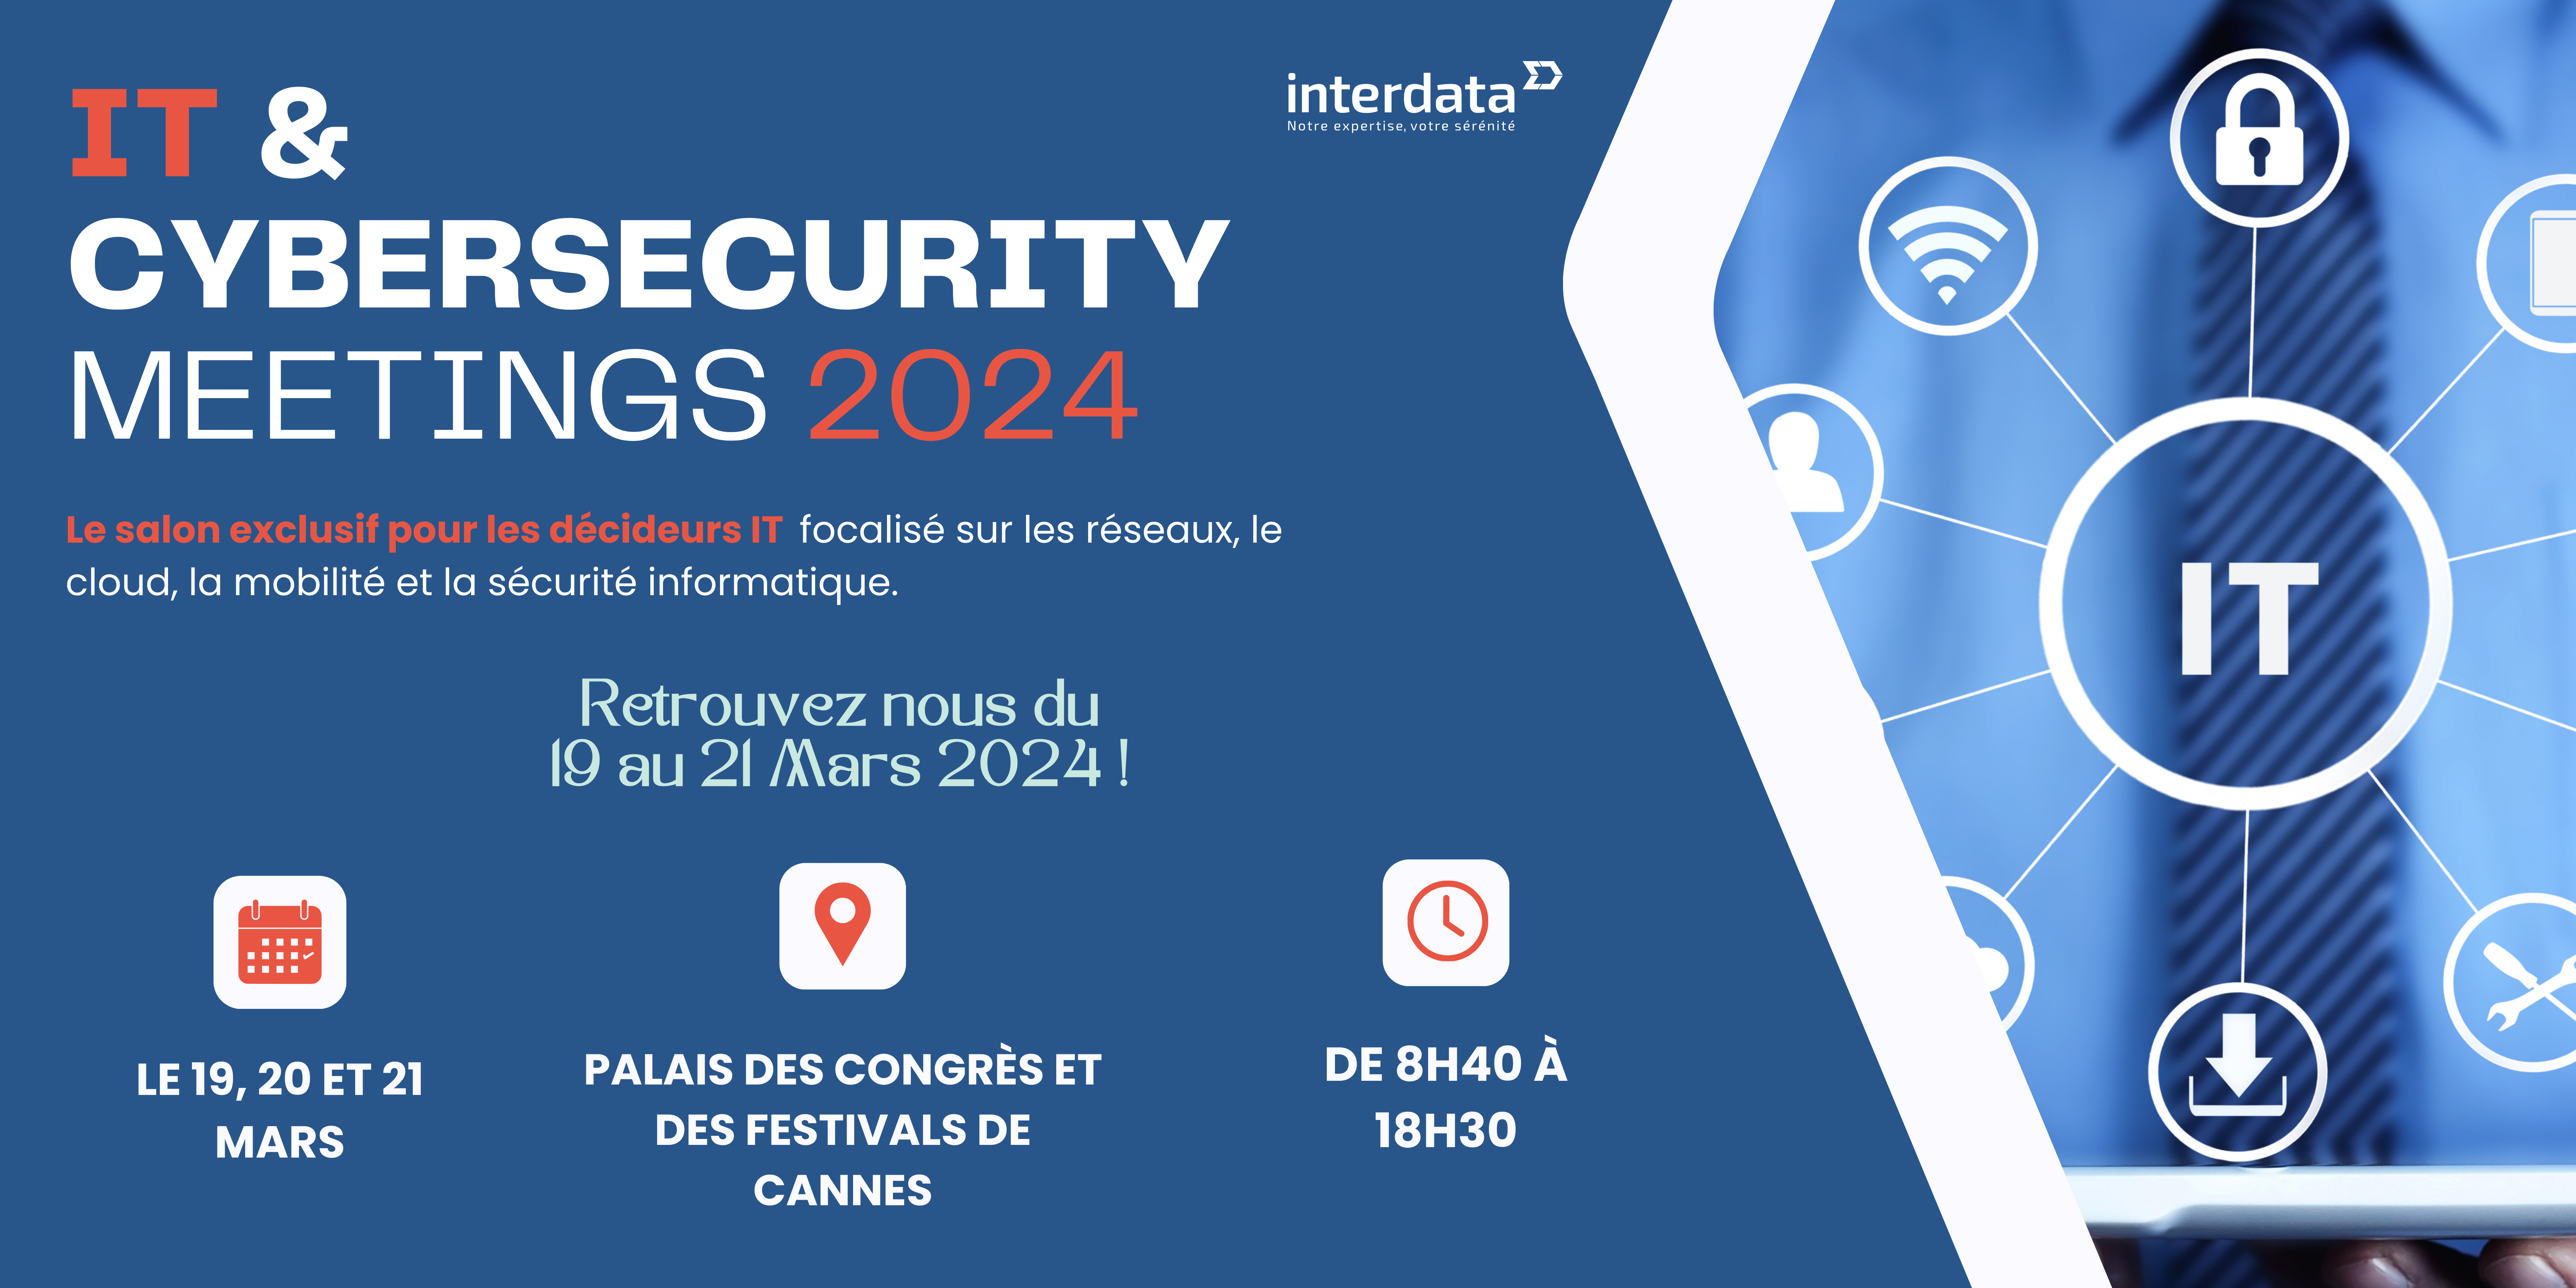 Interdata sera présent au salon It & Cybersecurity Meetings 2024 